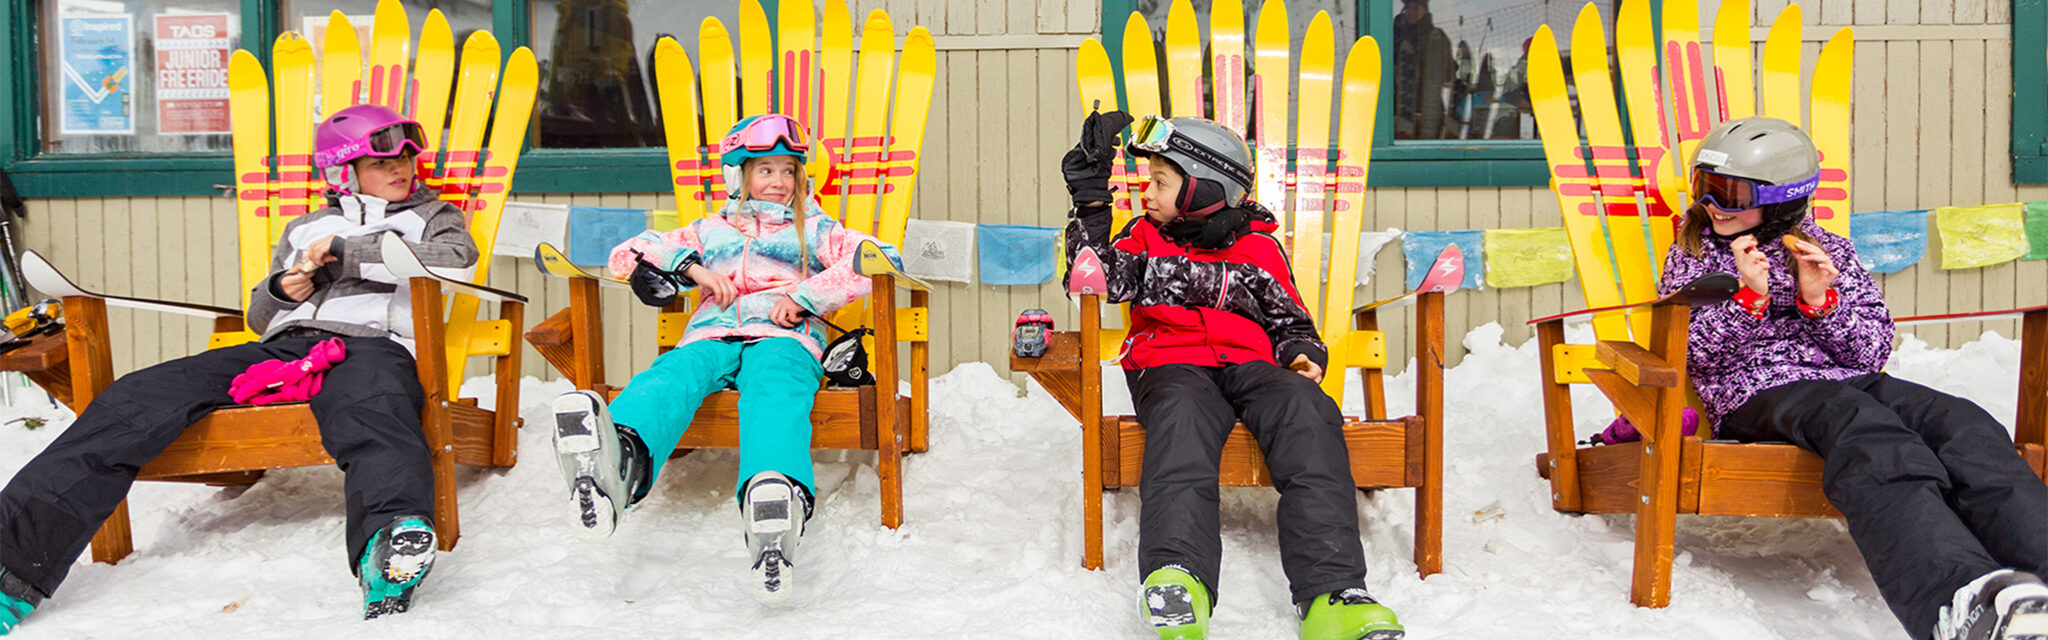 Kids make faces while taking a ski break in brightly colored Adirondak chairs